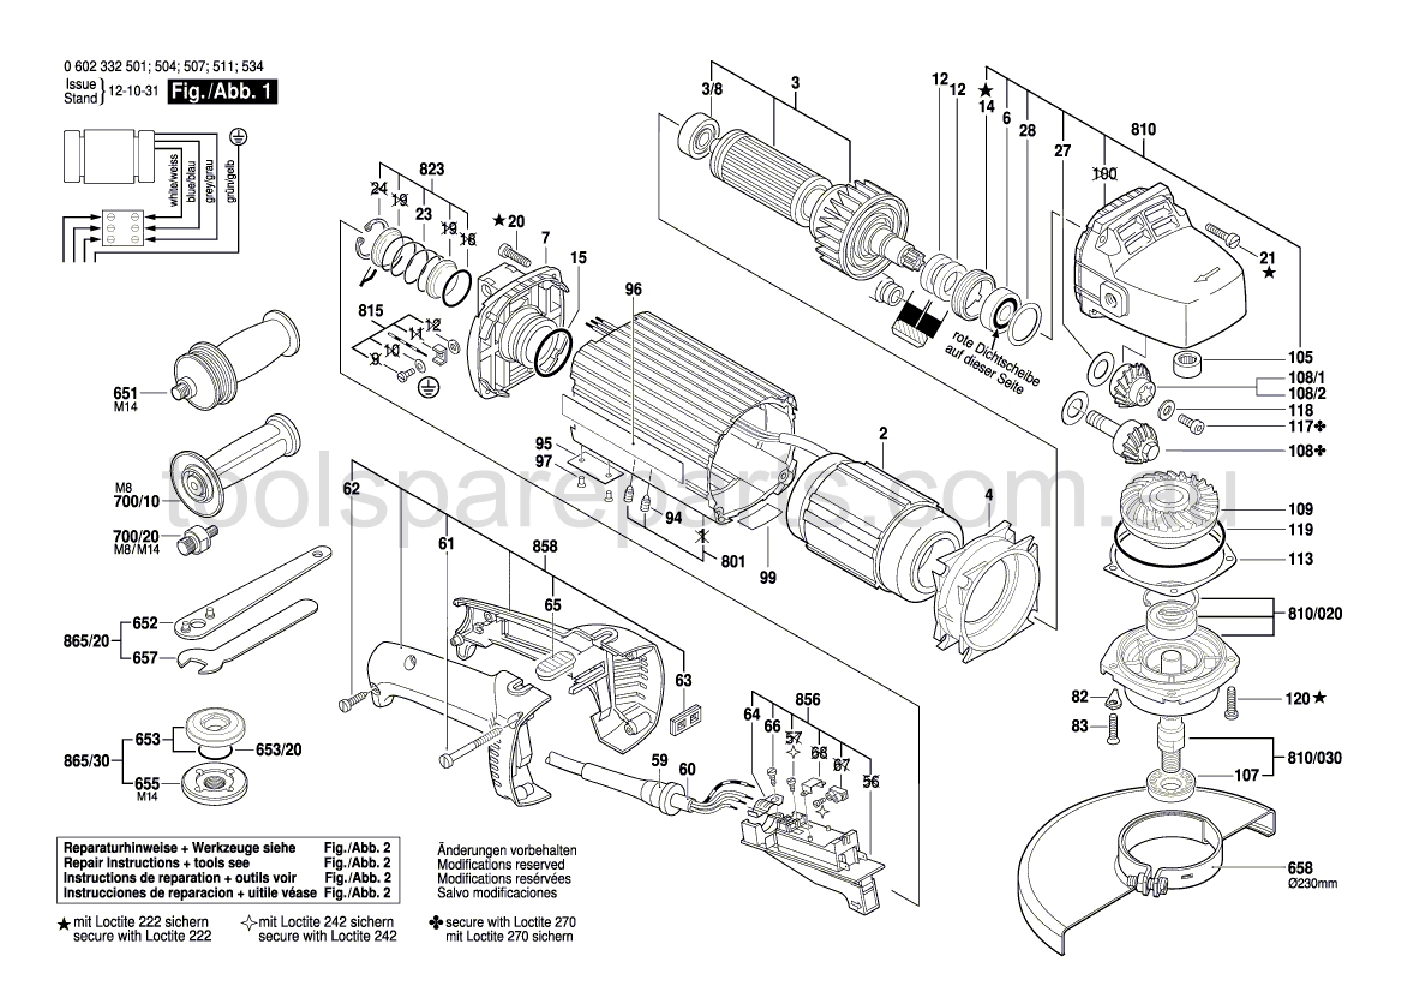 Bosch HWS 88/230 0602332534  Diagram 1